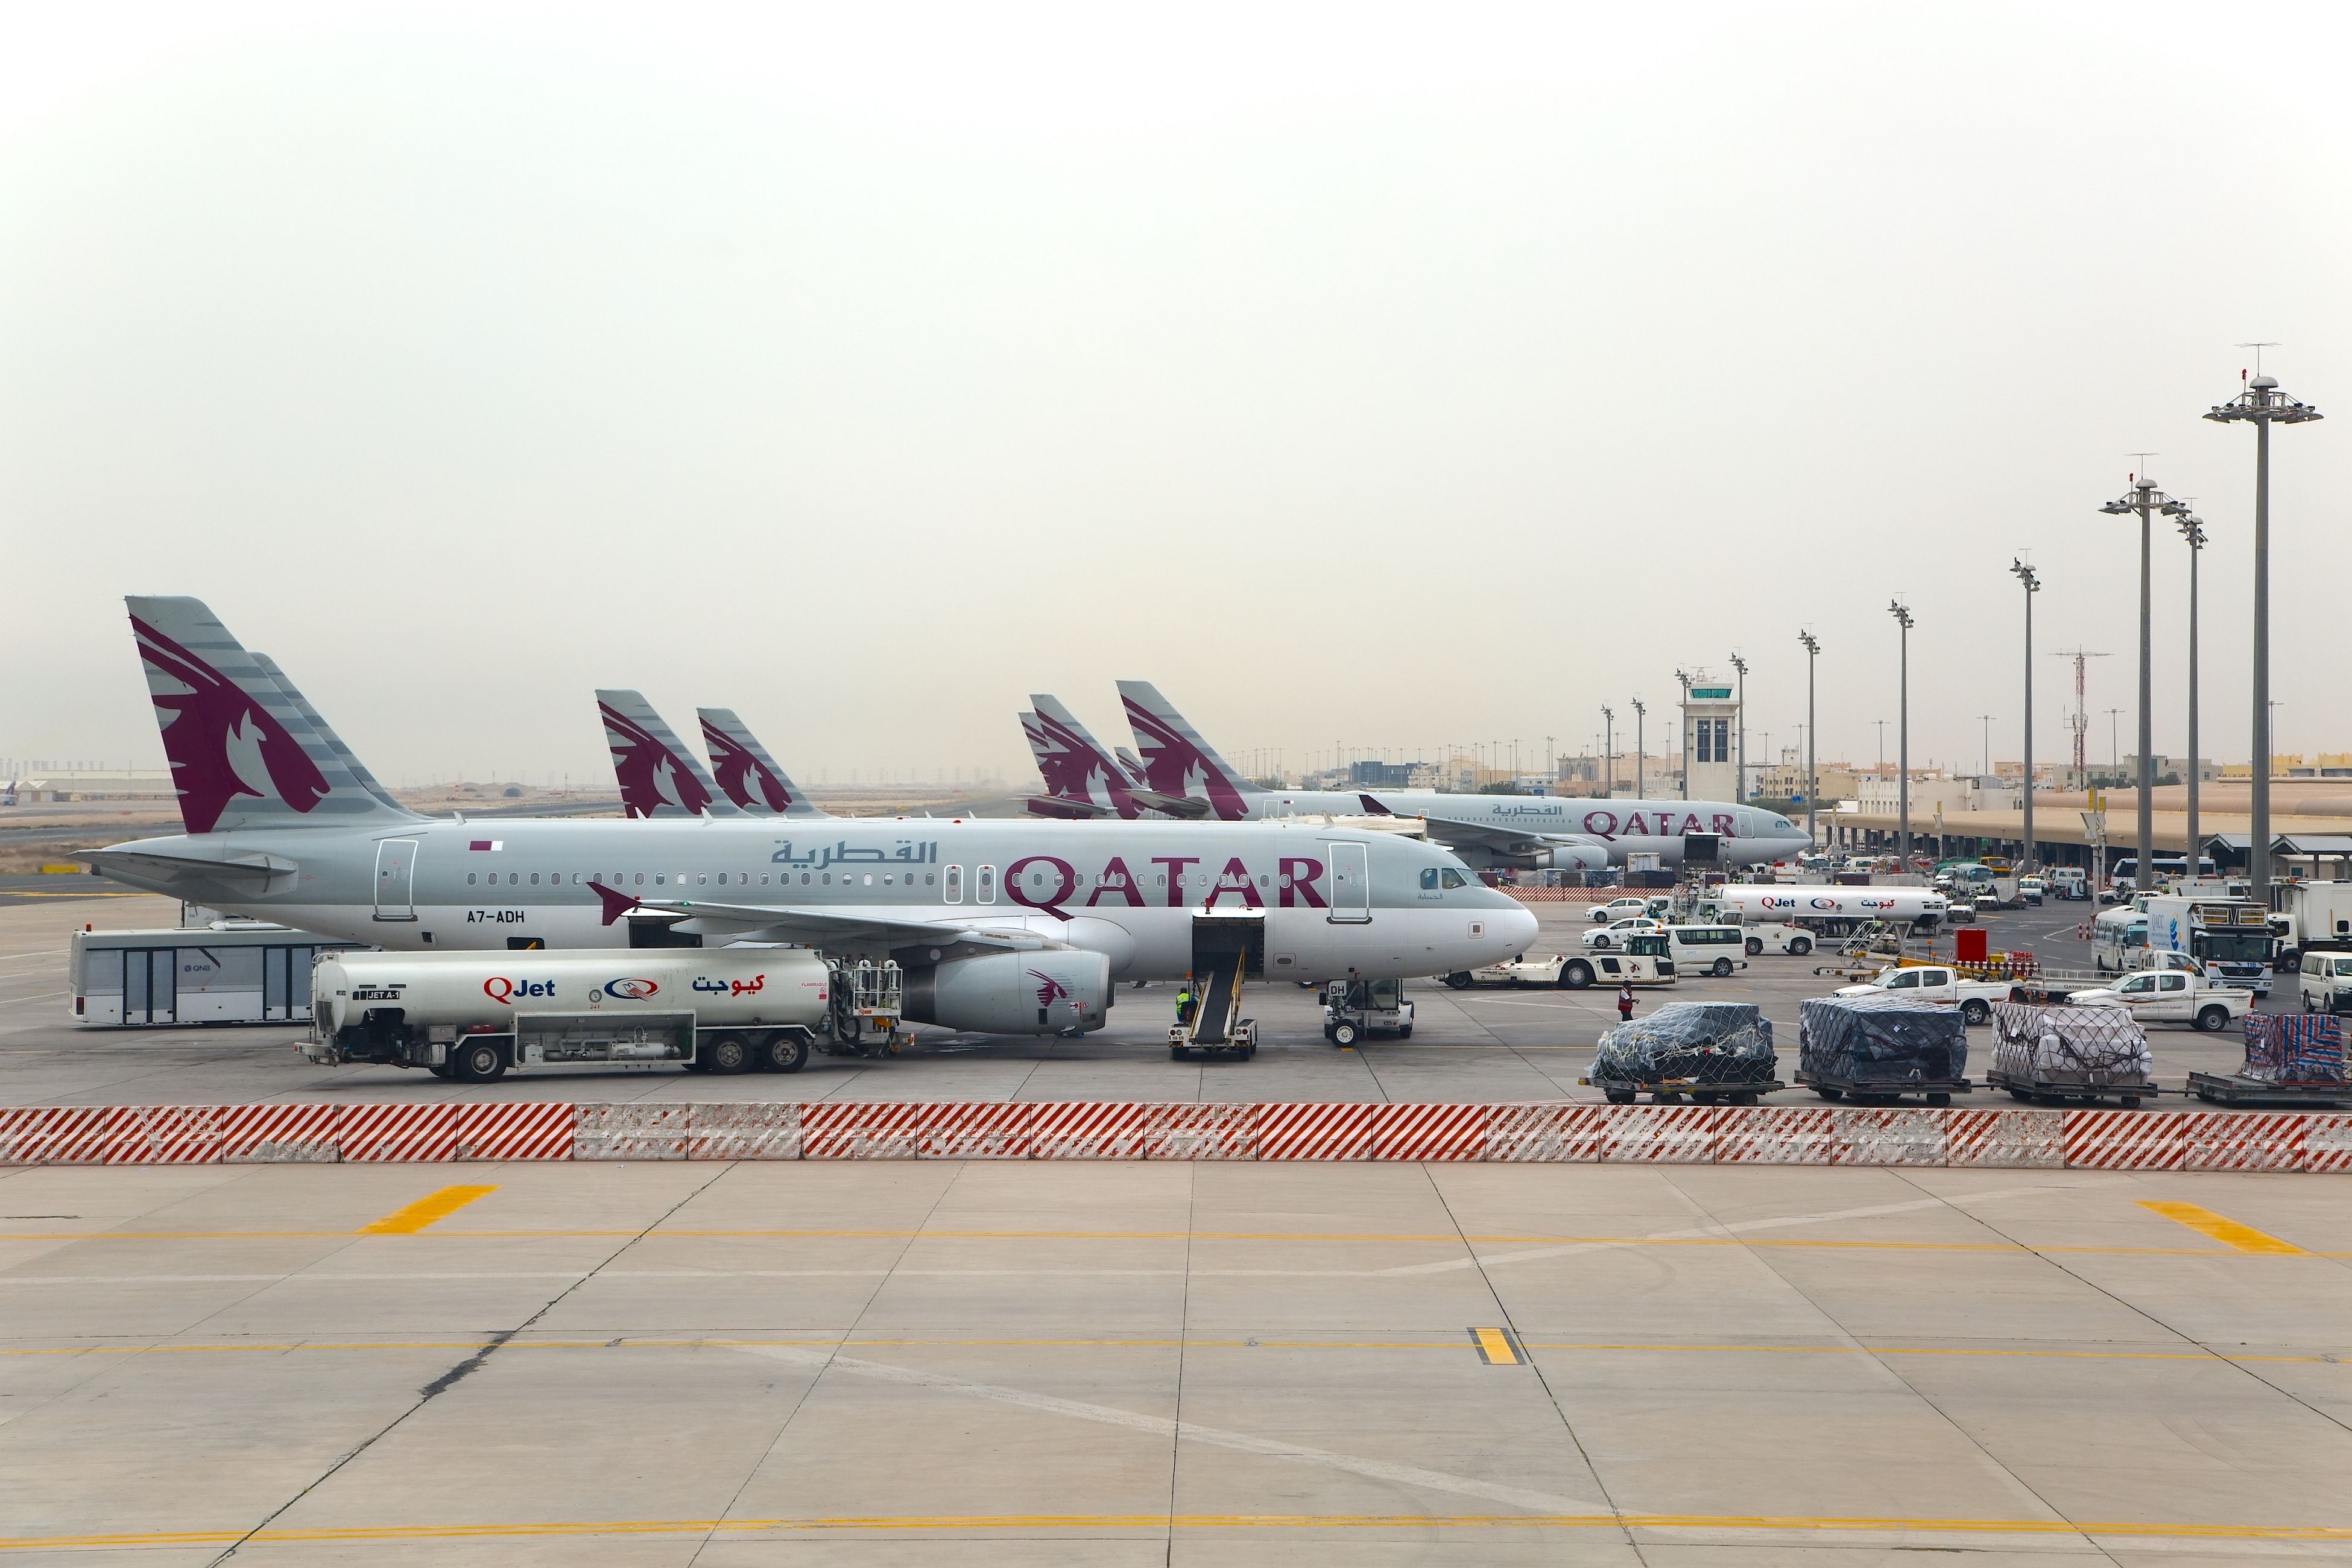 Qatar Airways fleet at Doha Hamad International Airport